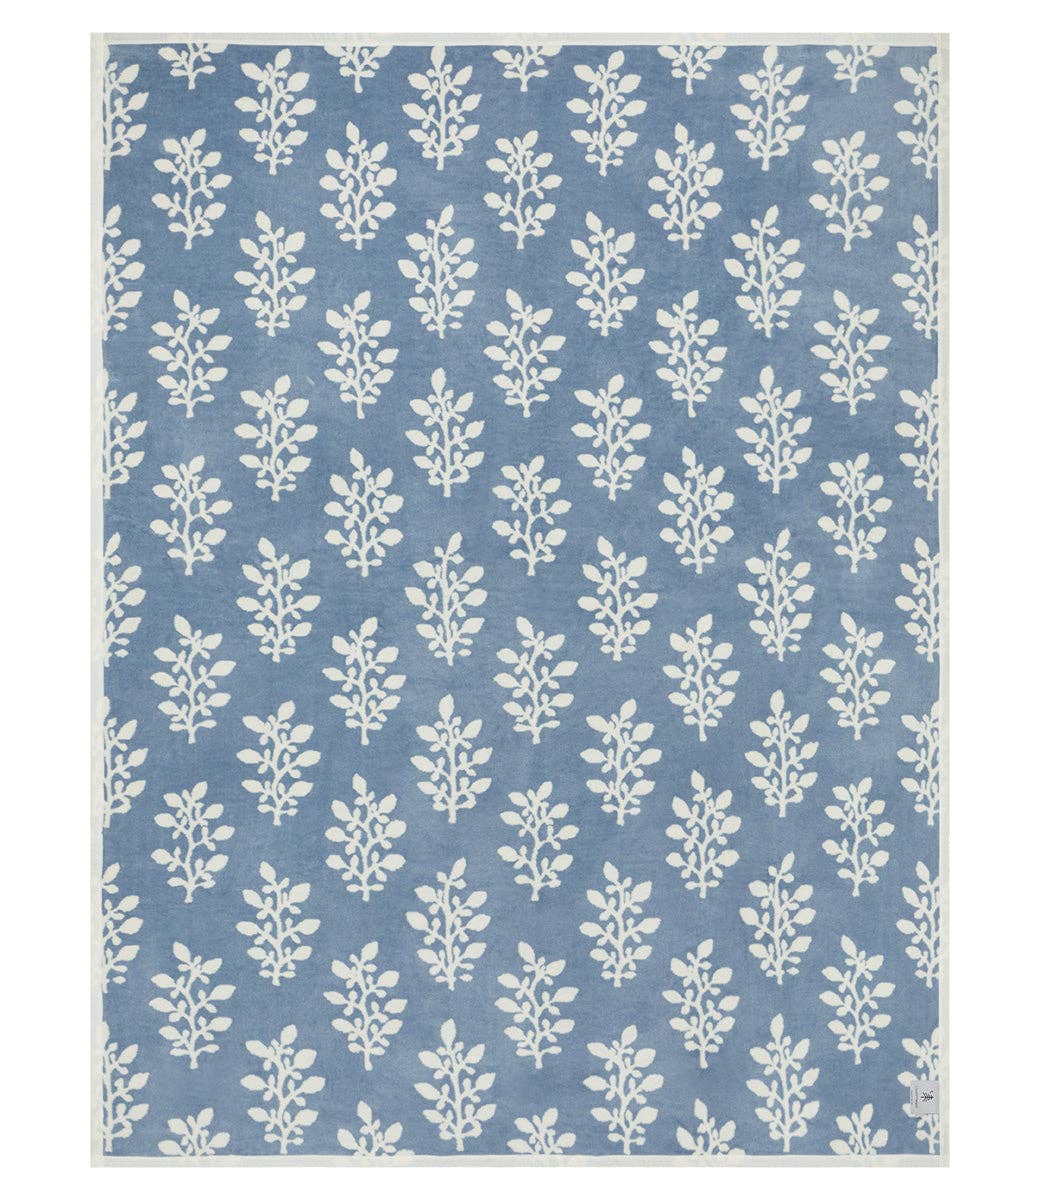 Garden Gate Blue Blanket by ChappyWrap - The Preppy Bunny